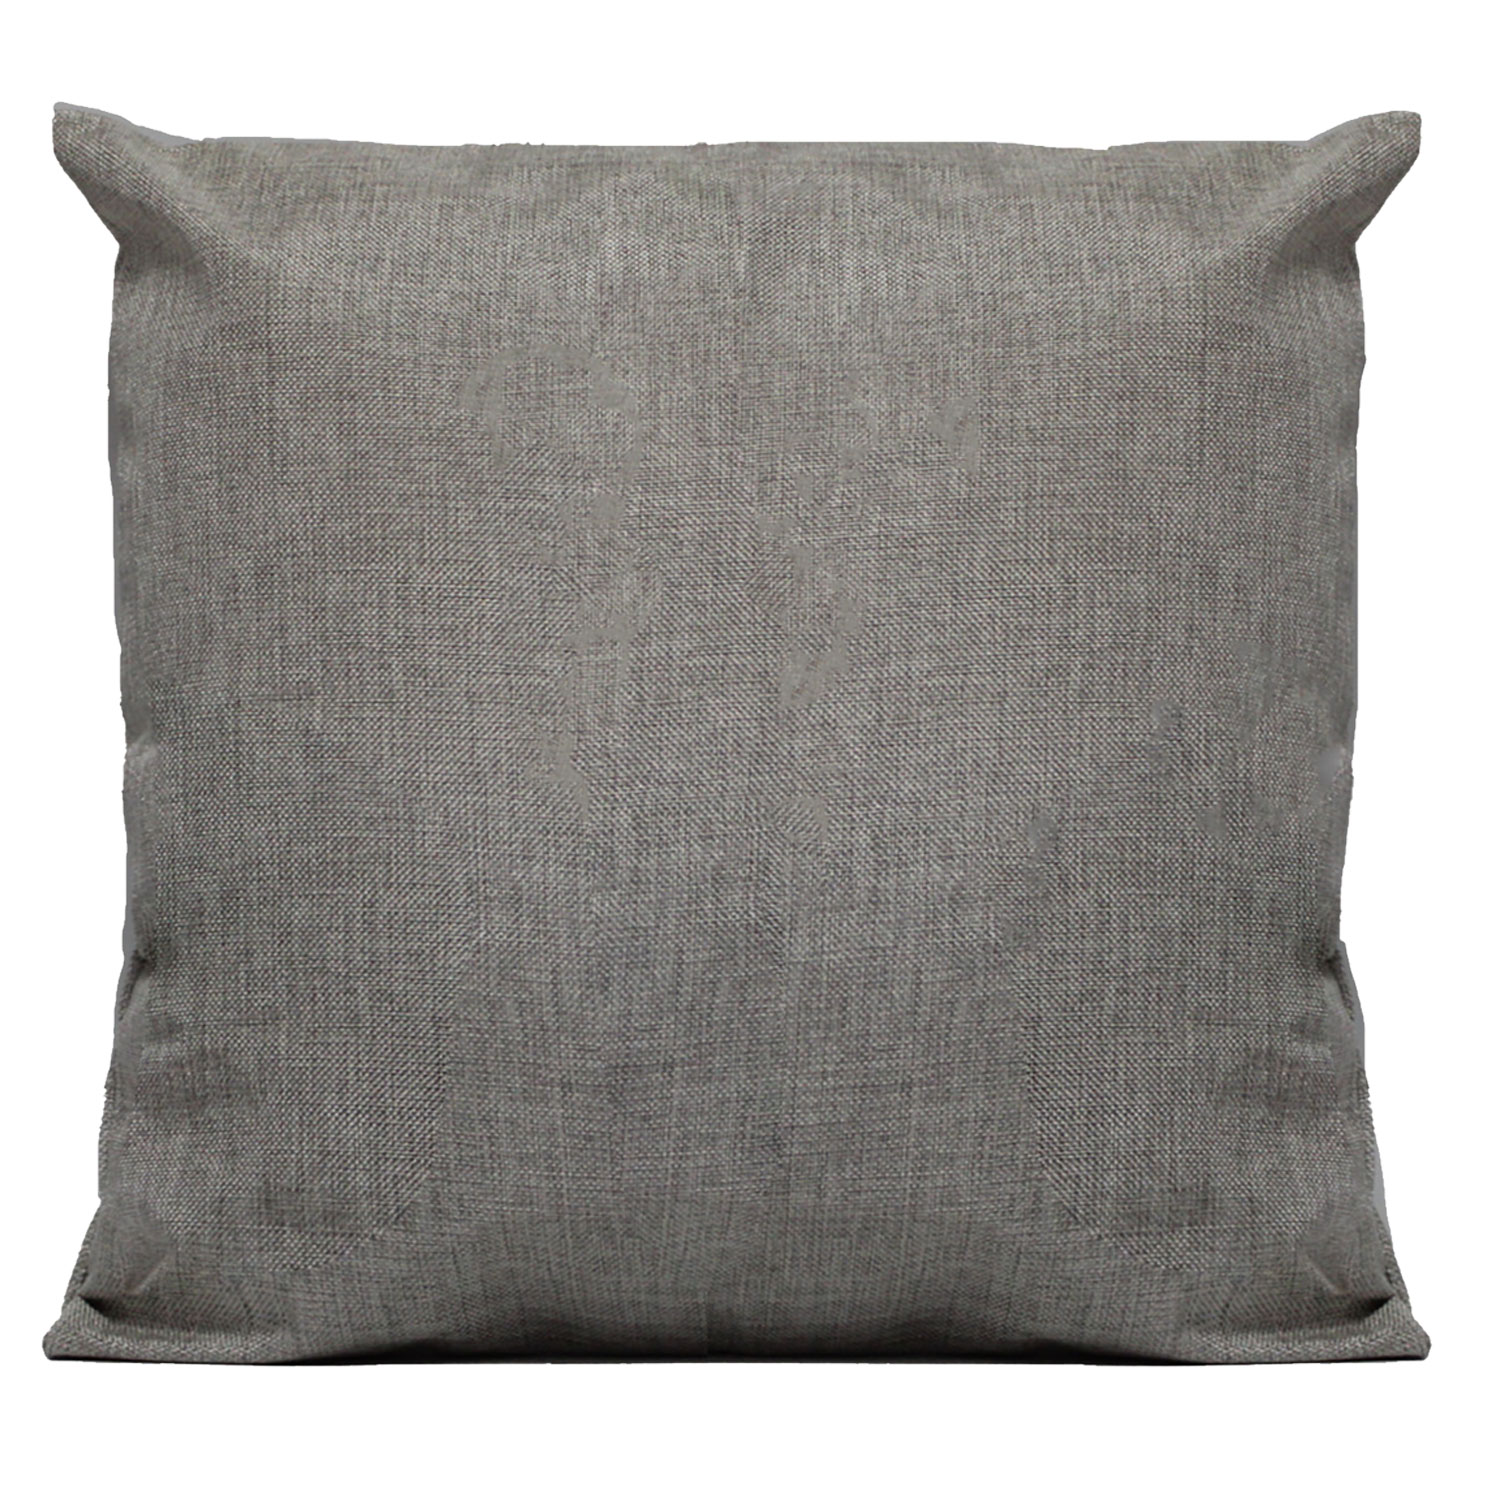 Chita decorative pillow, 18"x18" - Gris